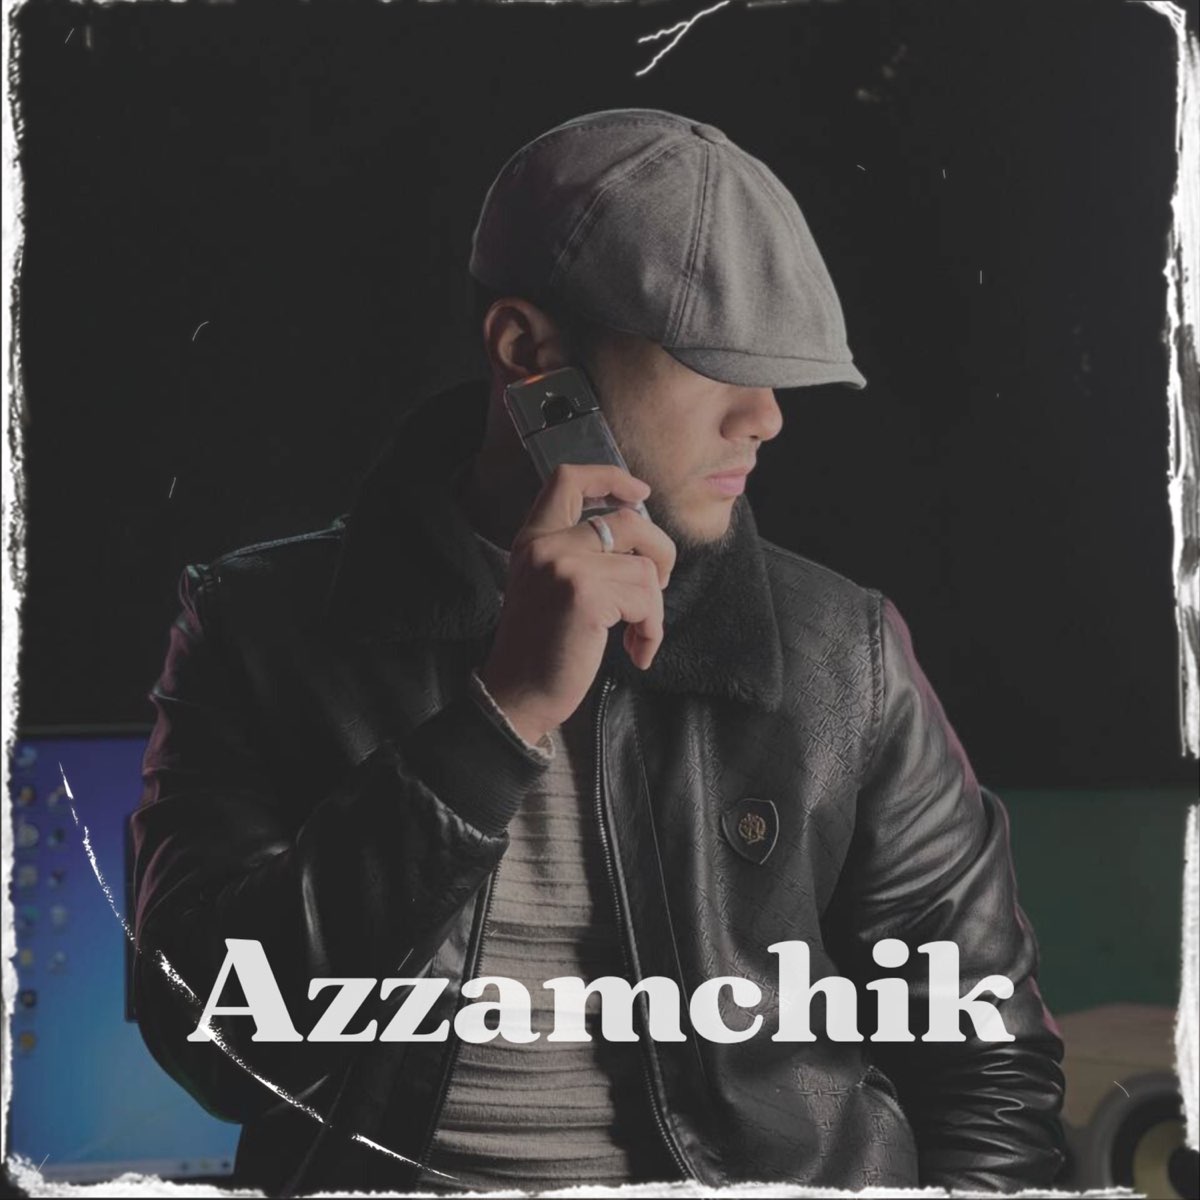 Do'stlarim - Single by Azzamchik on Apple Music